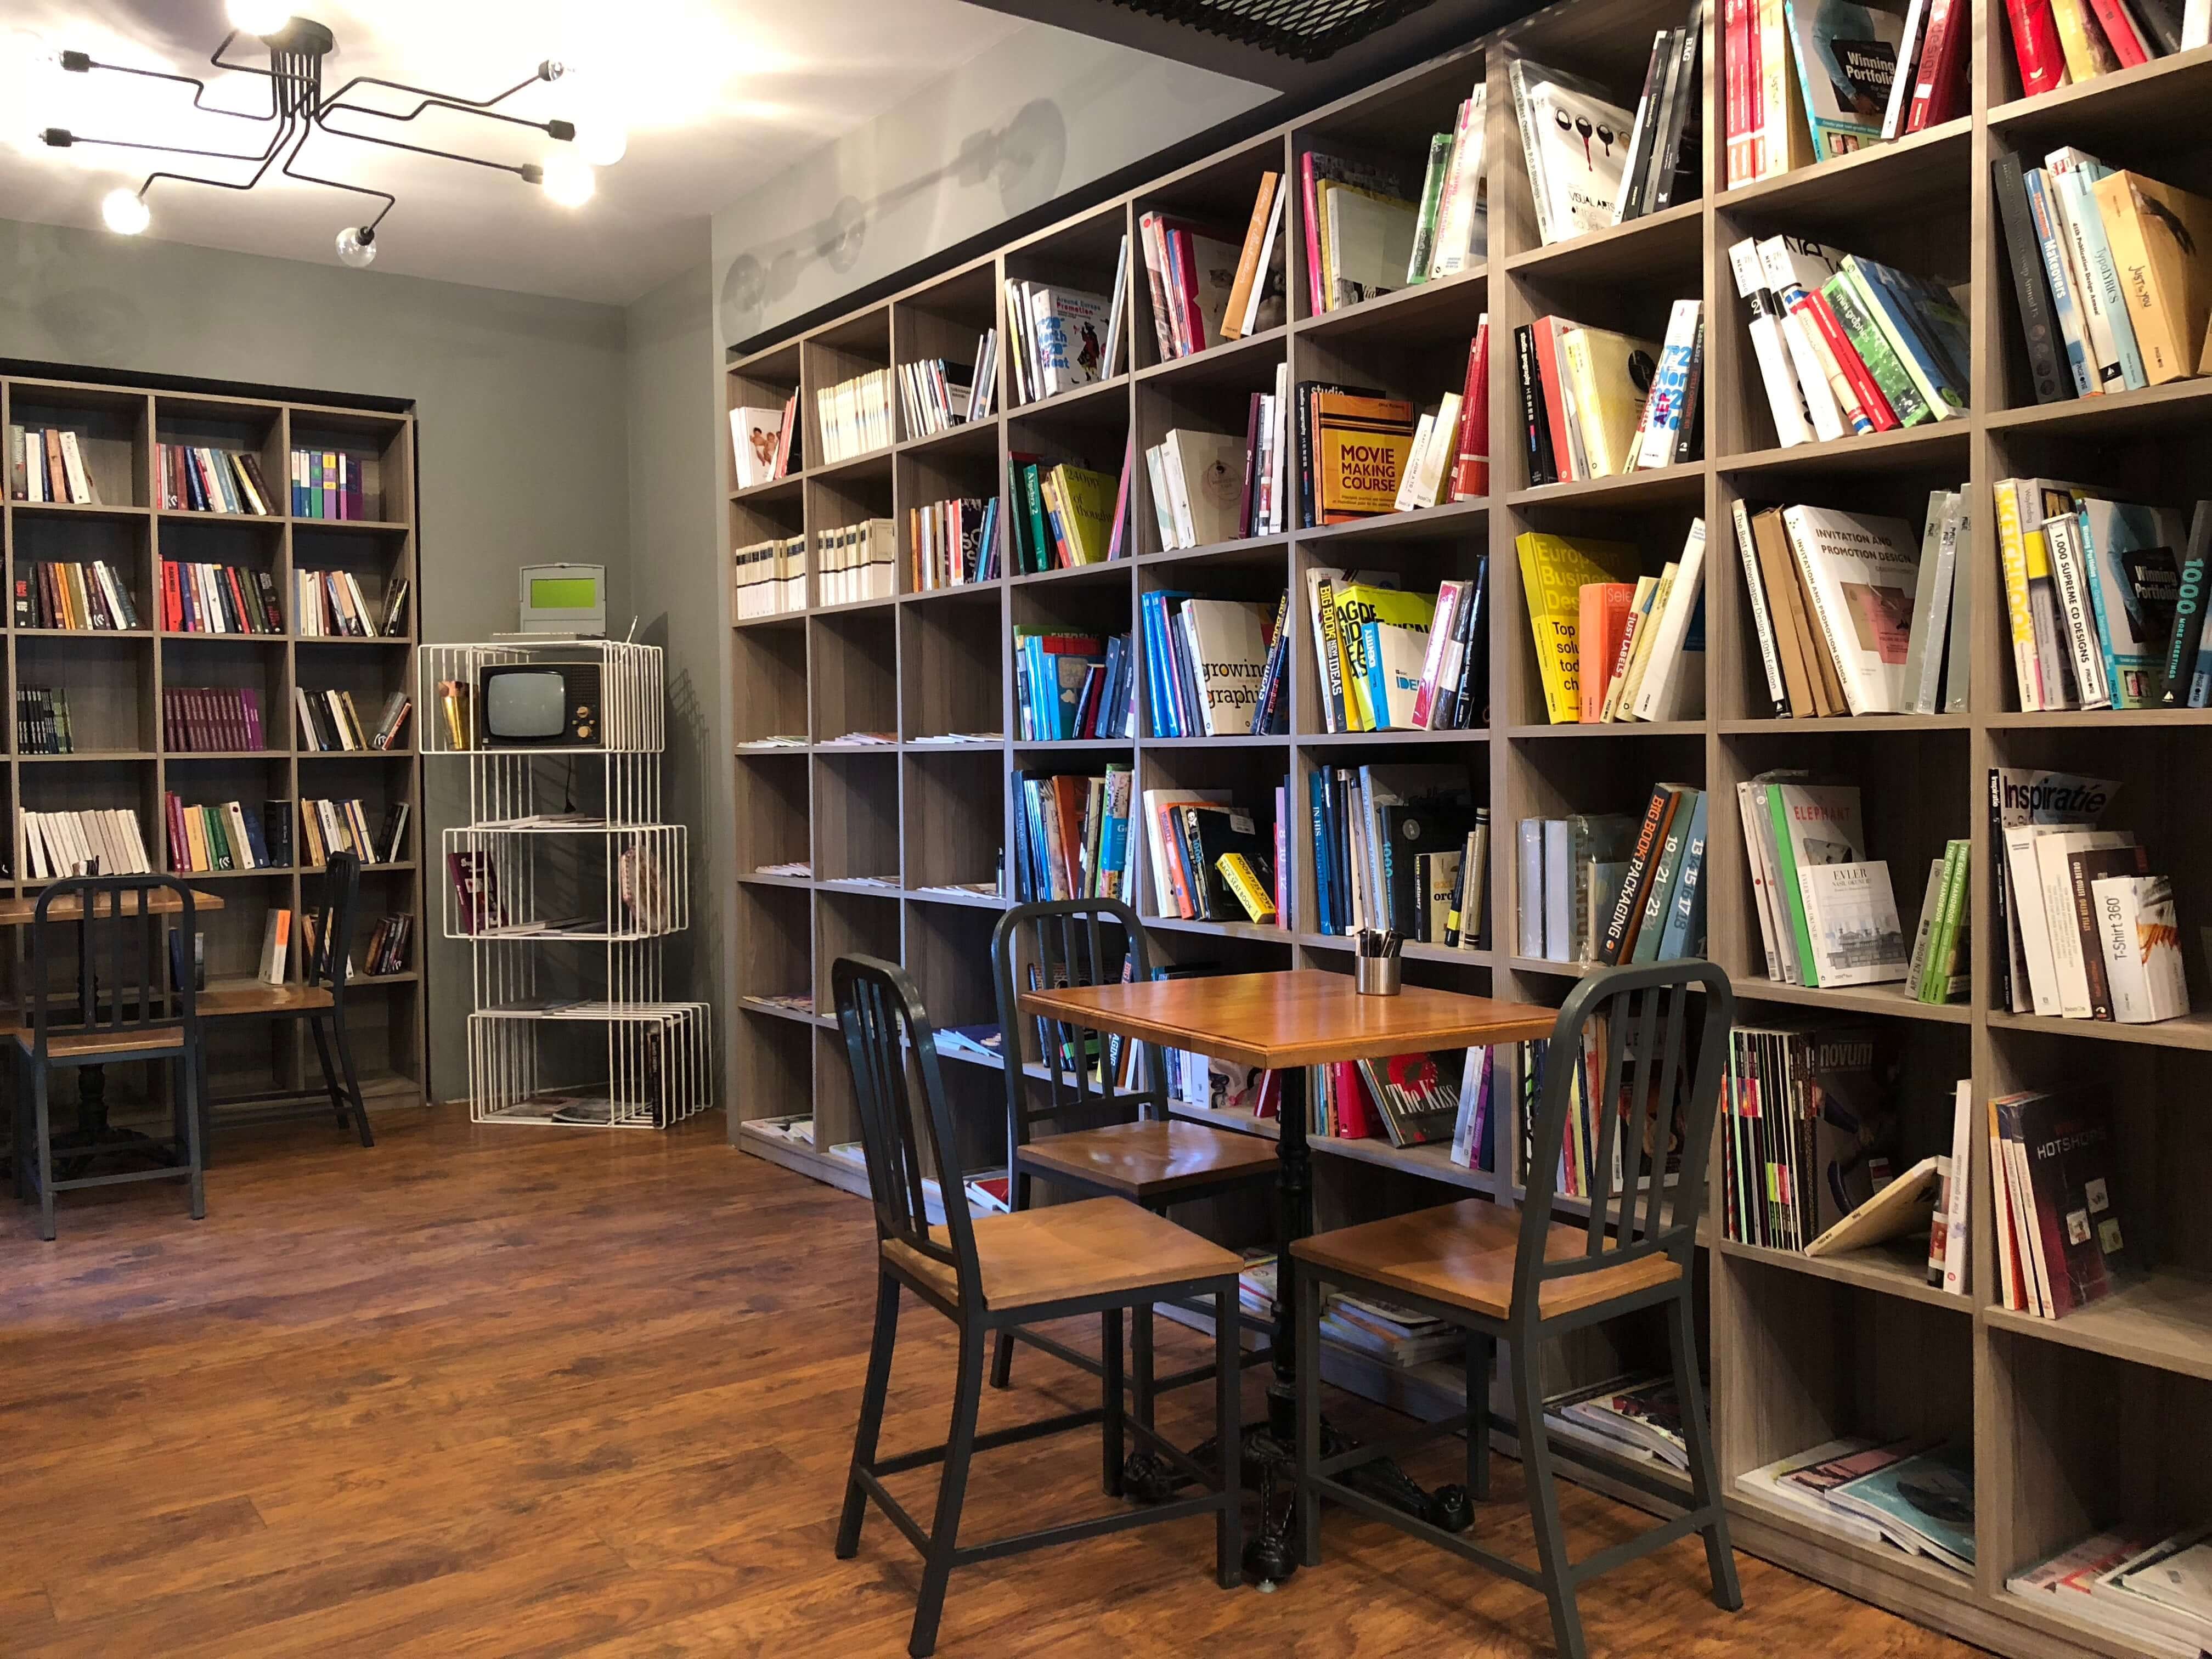 Tasarim Bookshop Cafe Kadikoy De Kitaplarin Arasinda Nezih By Begum Moralioglu Remoteistanbul Medium